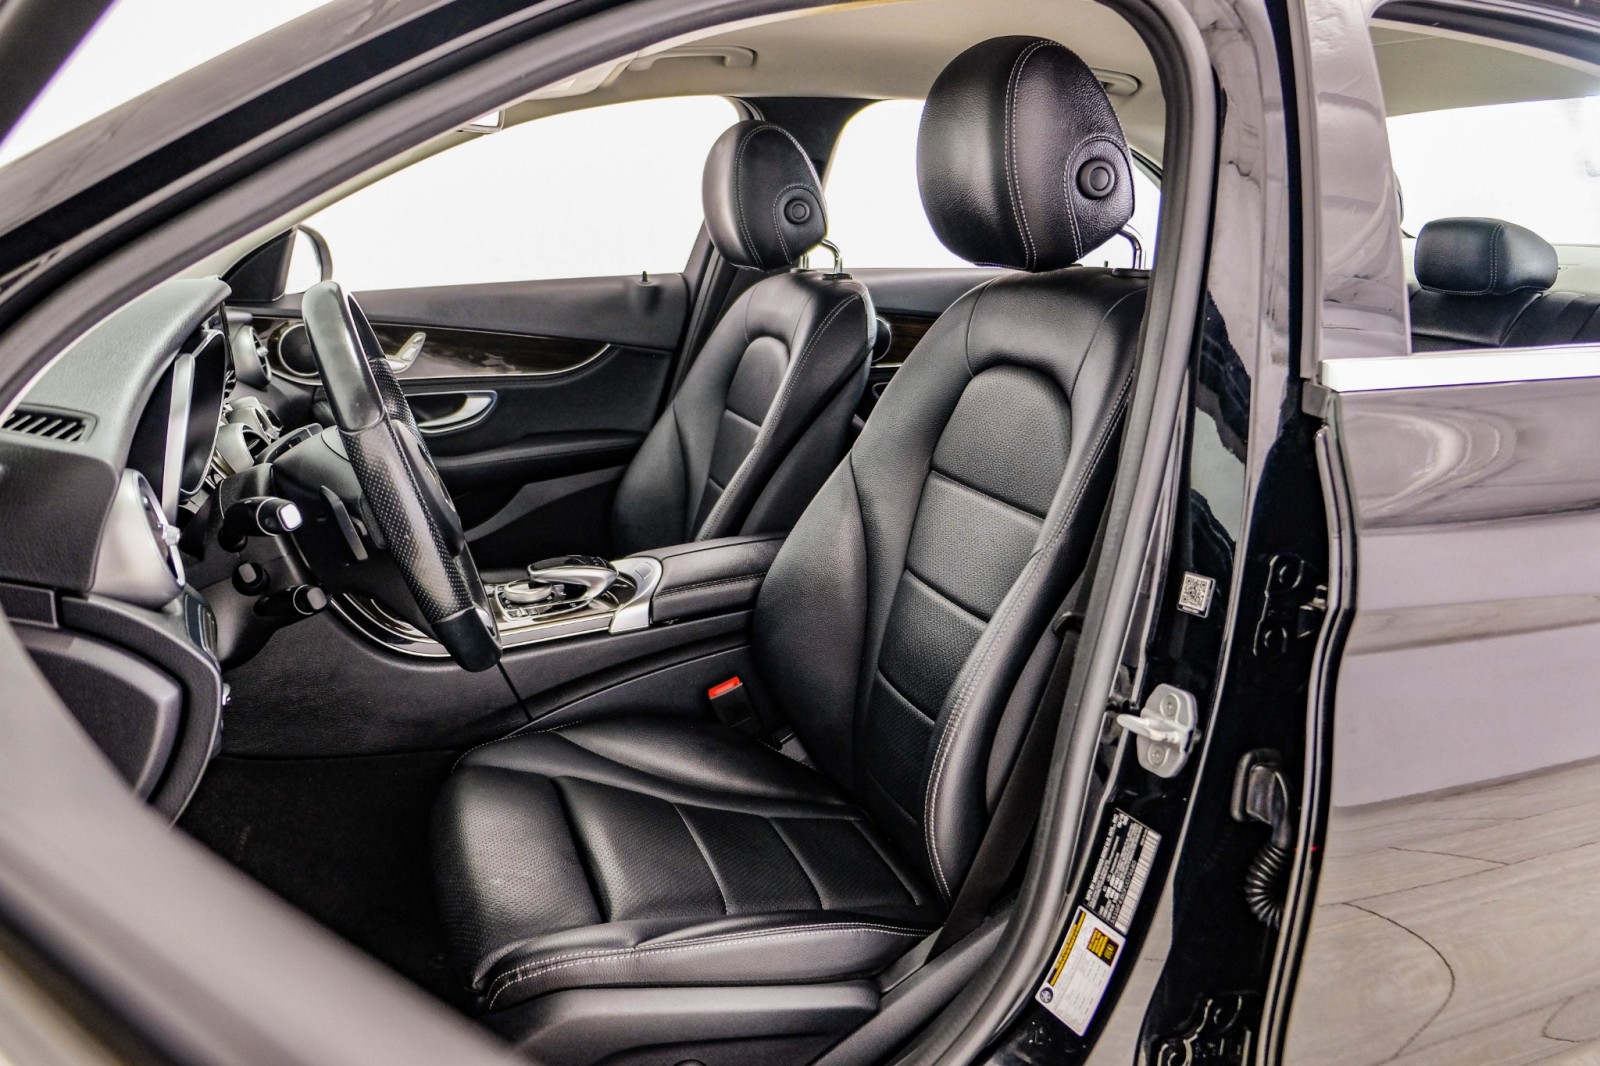 2015 Mercedes-Benz C300 SPORT BLIND SPOT ASSIST NAVIGATION LEATHER SEATS R 31